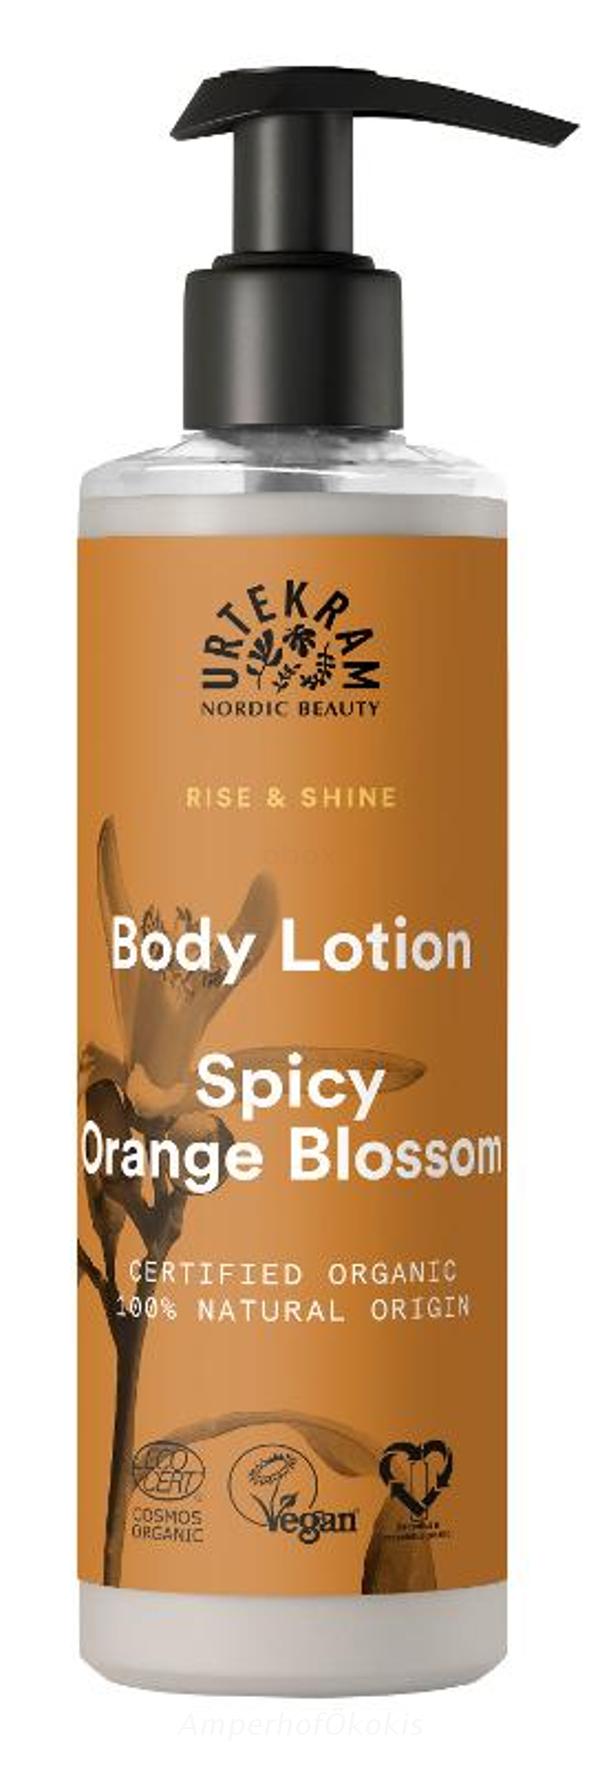 Produktfoto zu Body Lotion Spicy Orange Blossom 245 ml